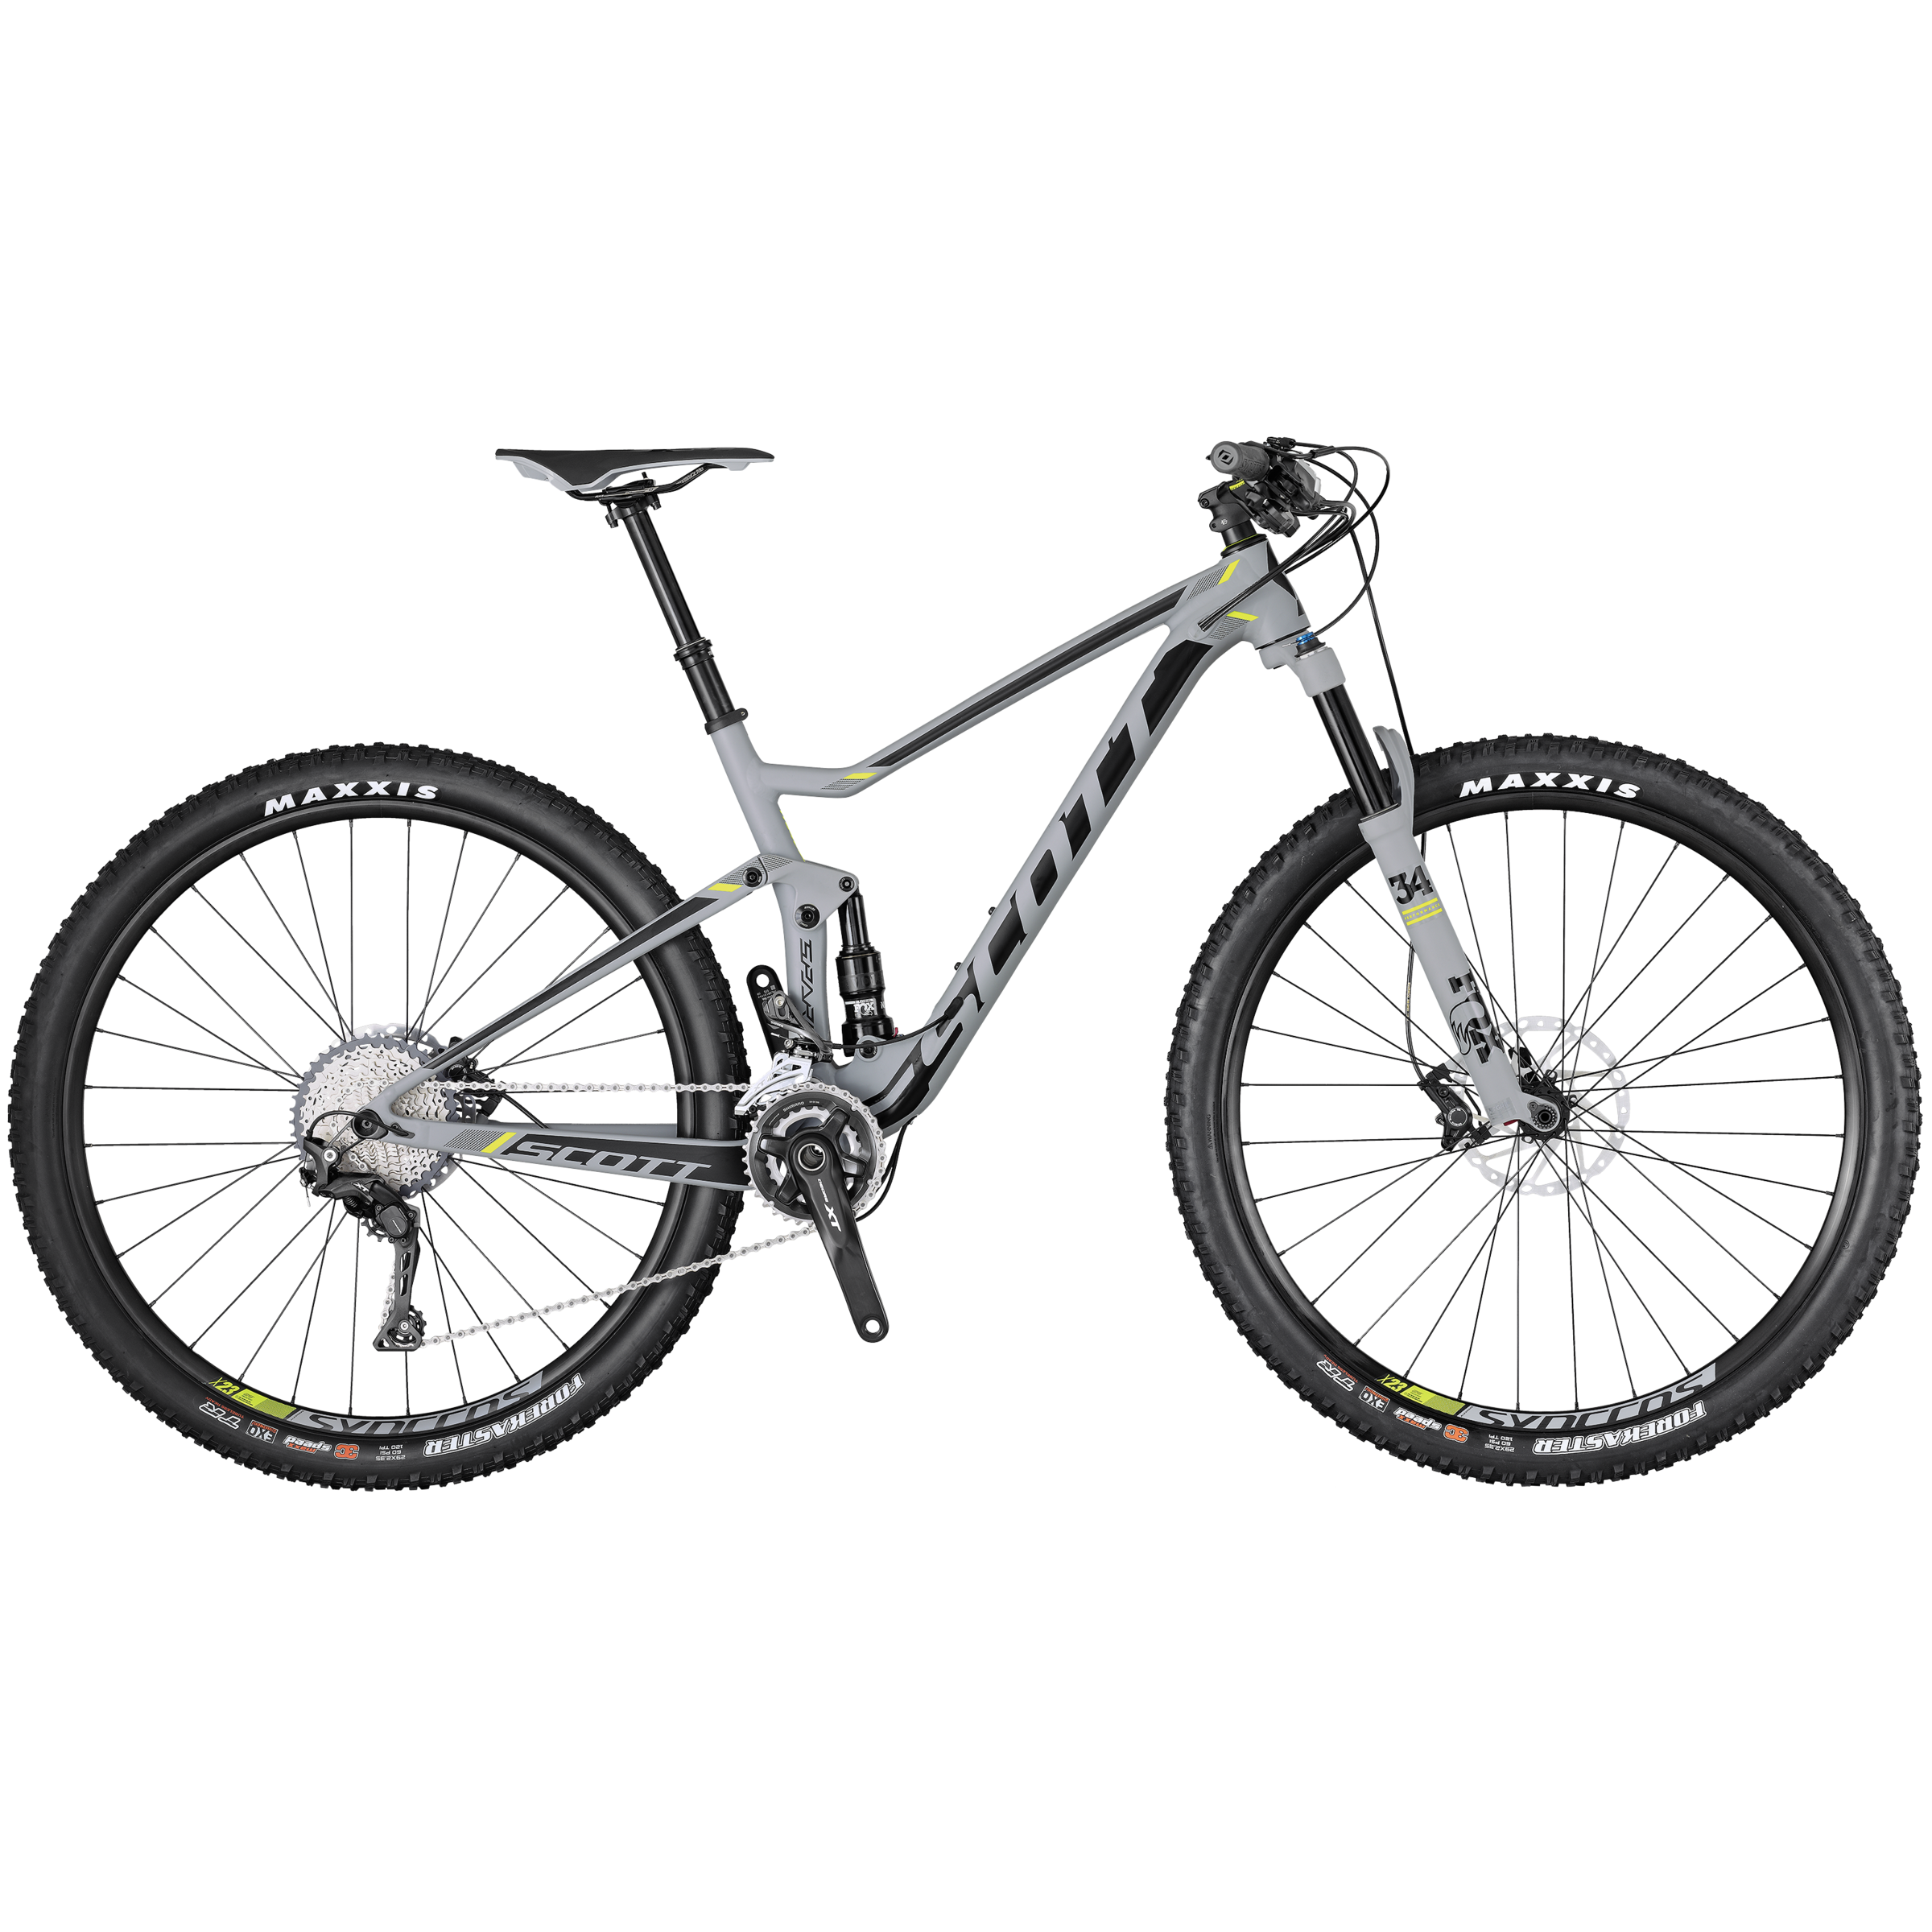 2017 Scott Spark 740 - Bicycle Details 